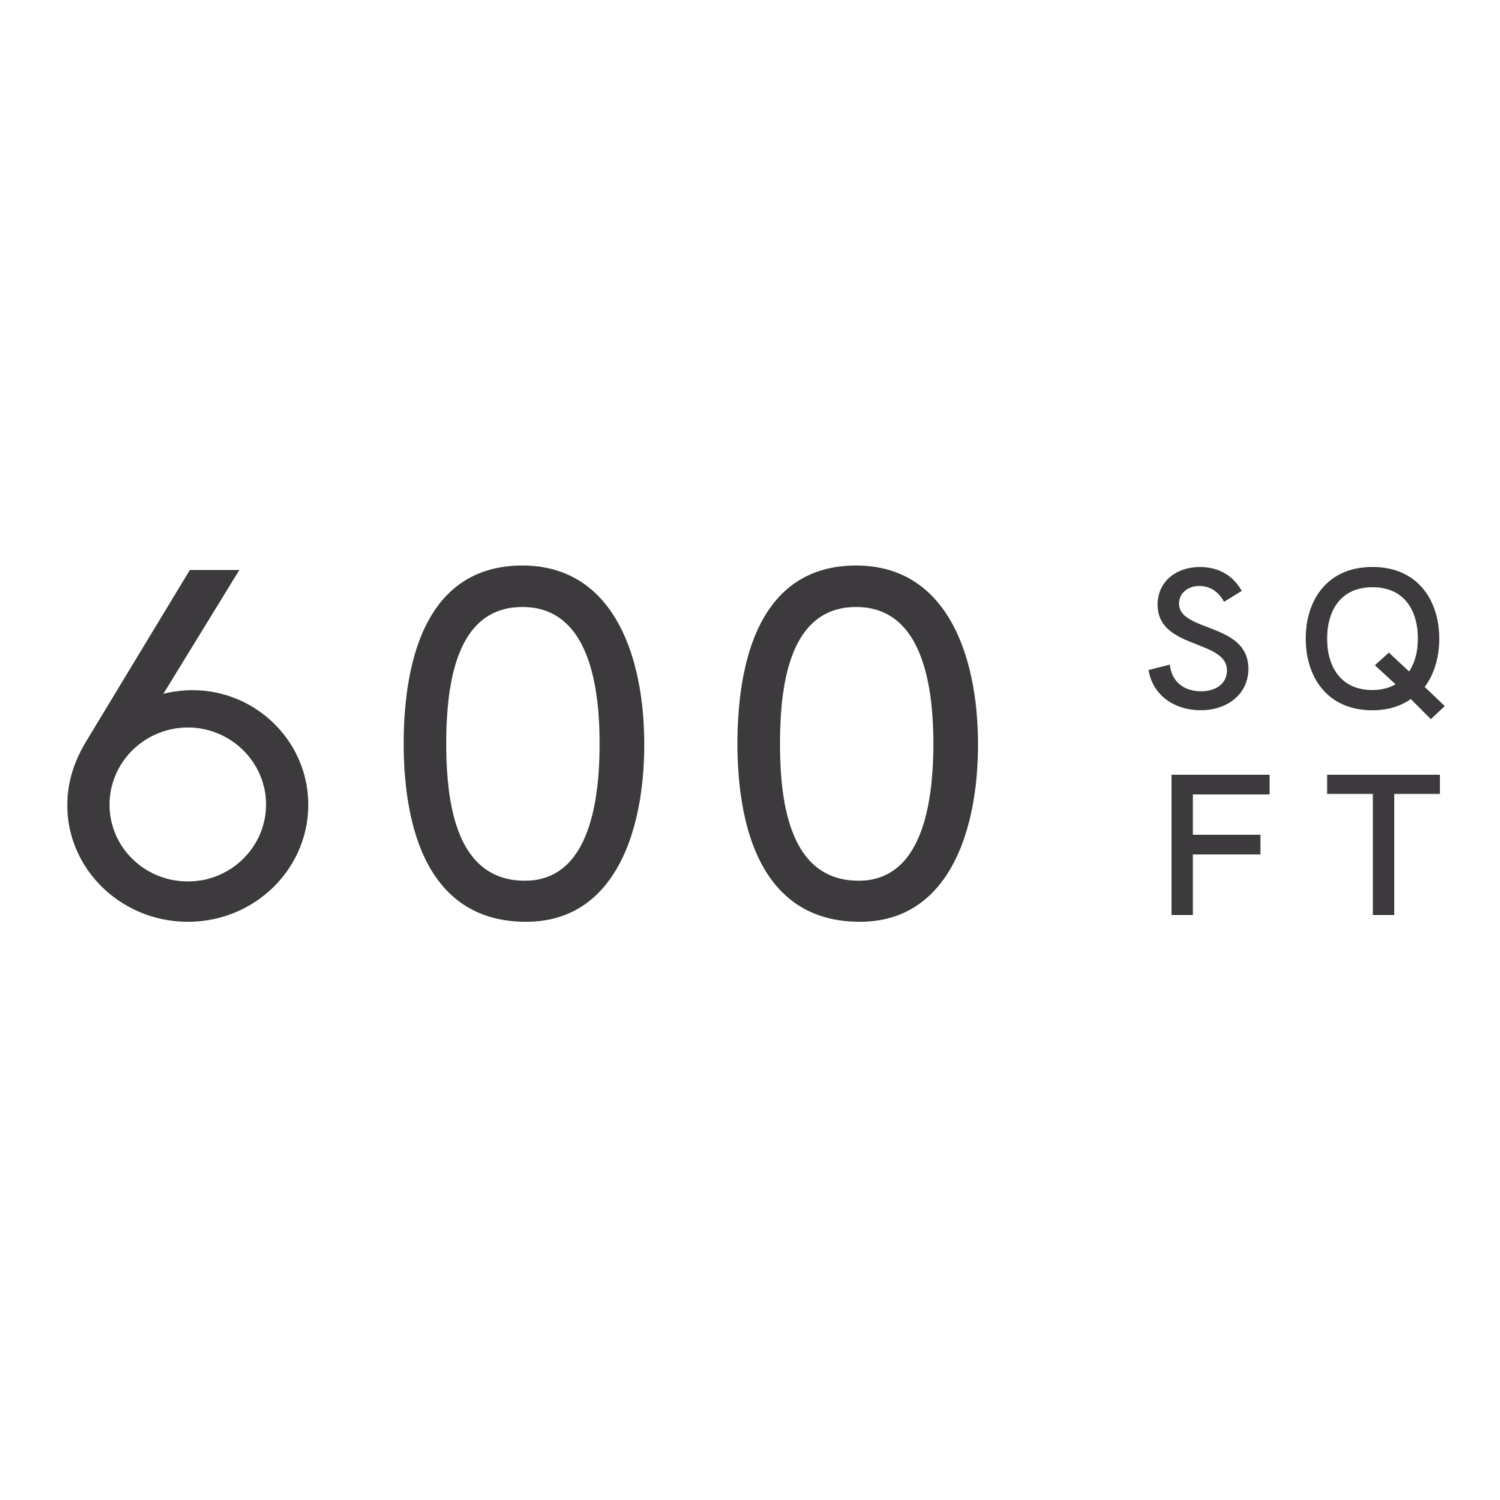 600 SQ FT